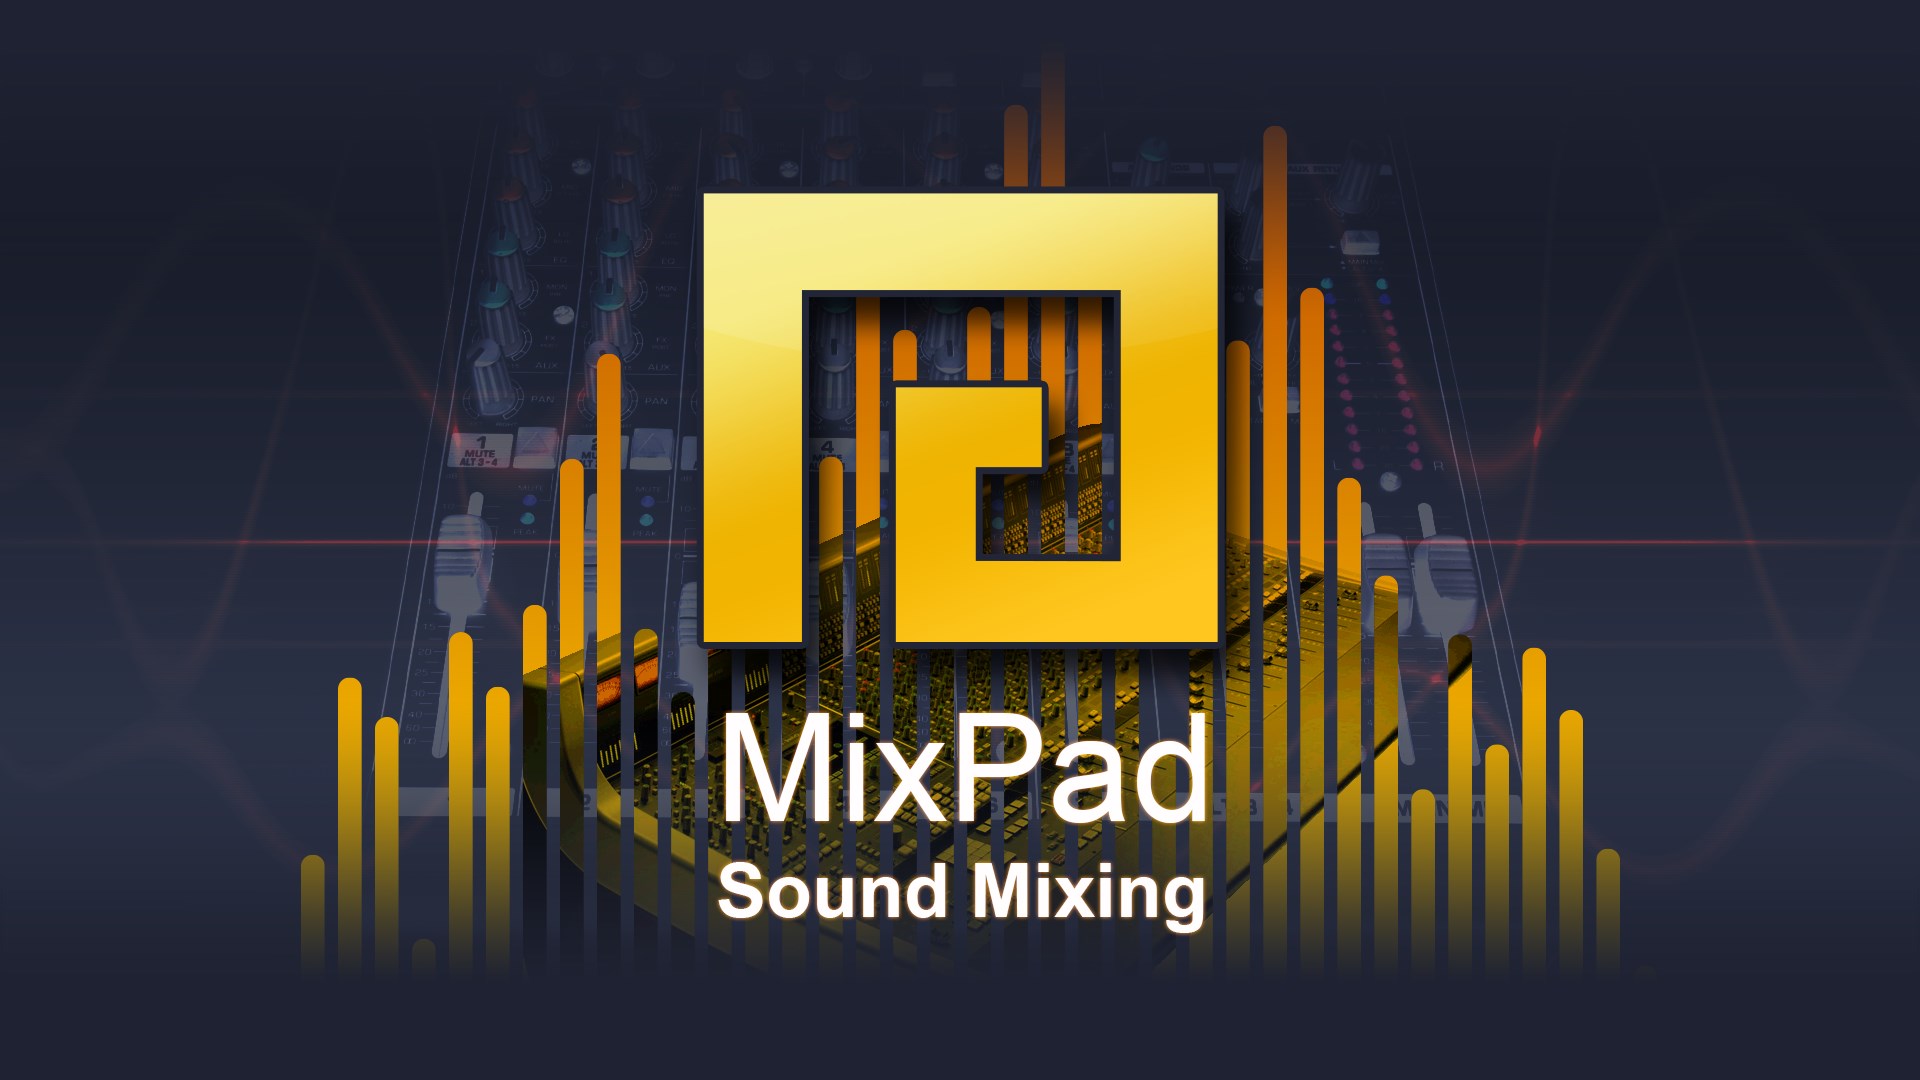 (20.89$) NCH: MixPad Multitrack Recording Key